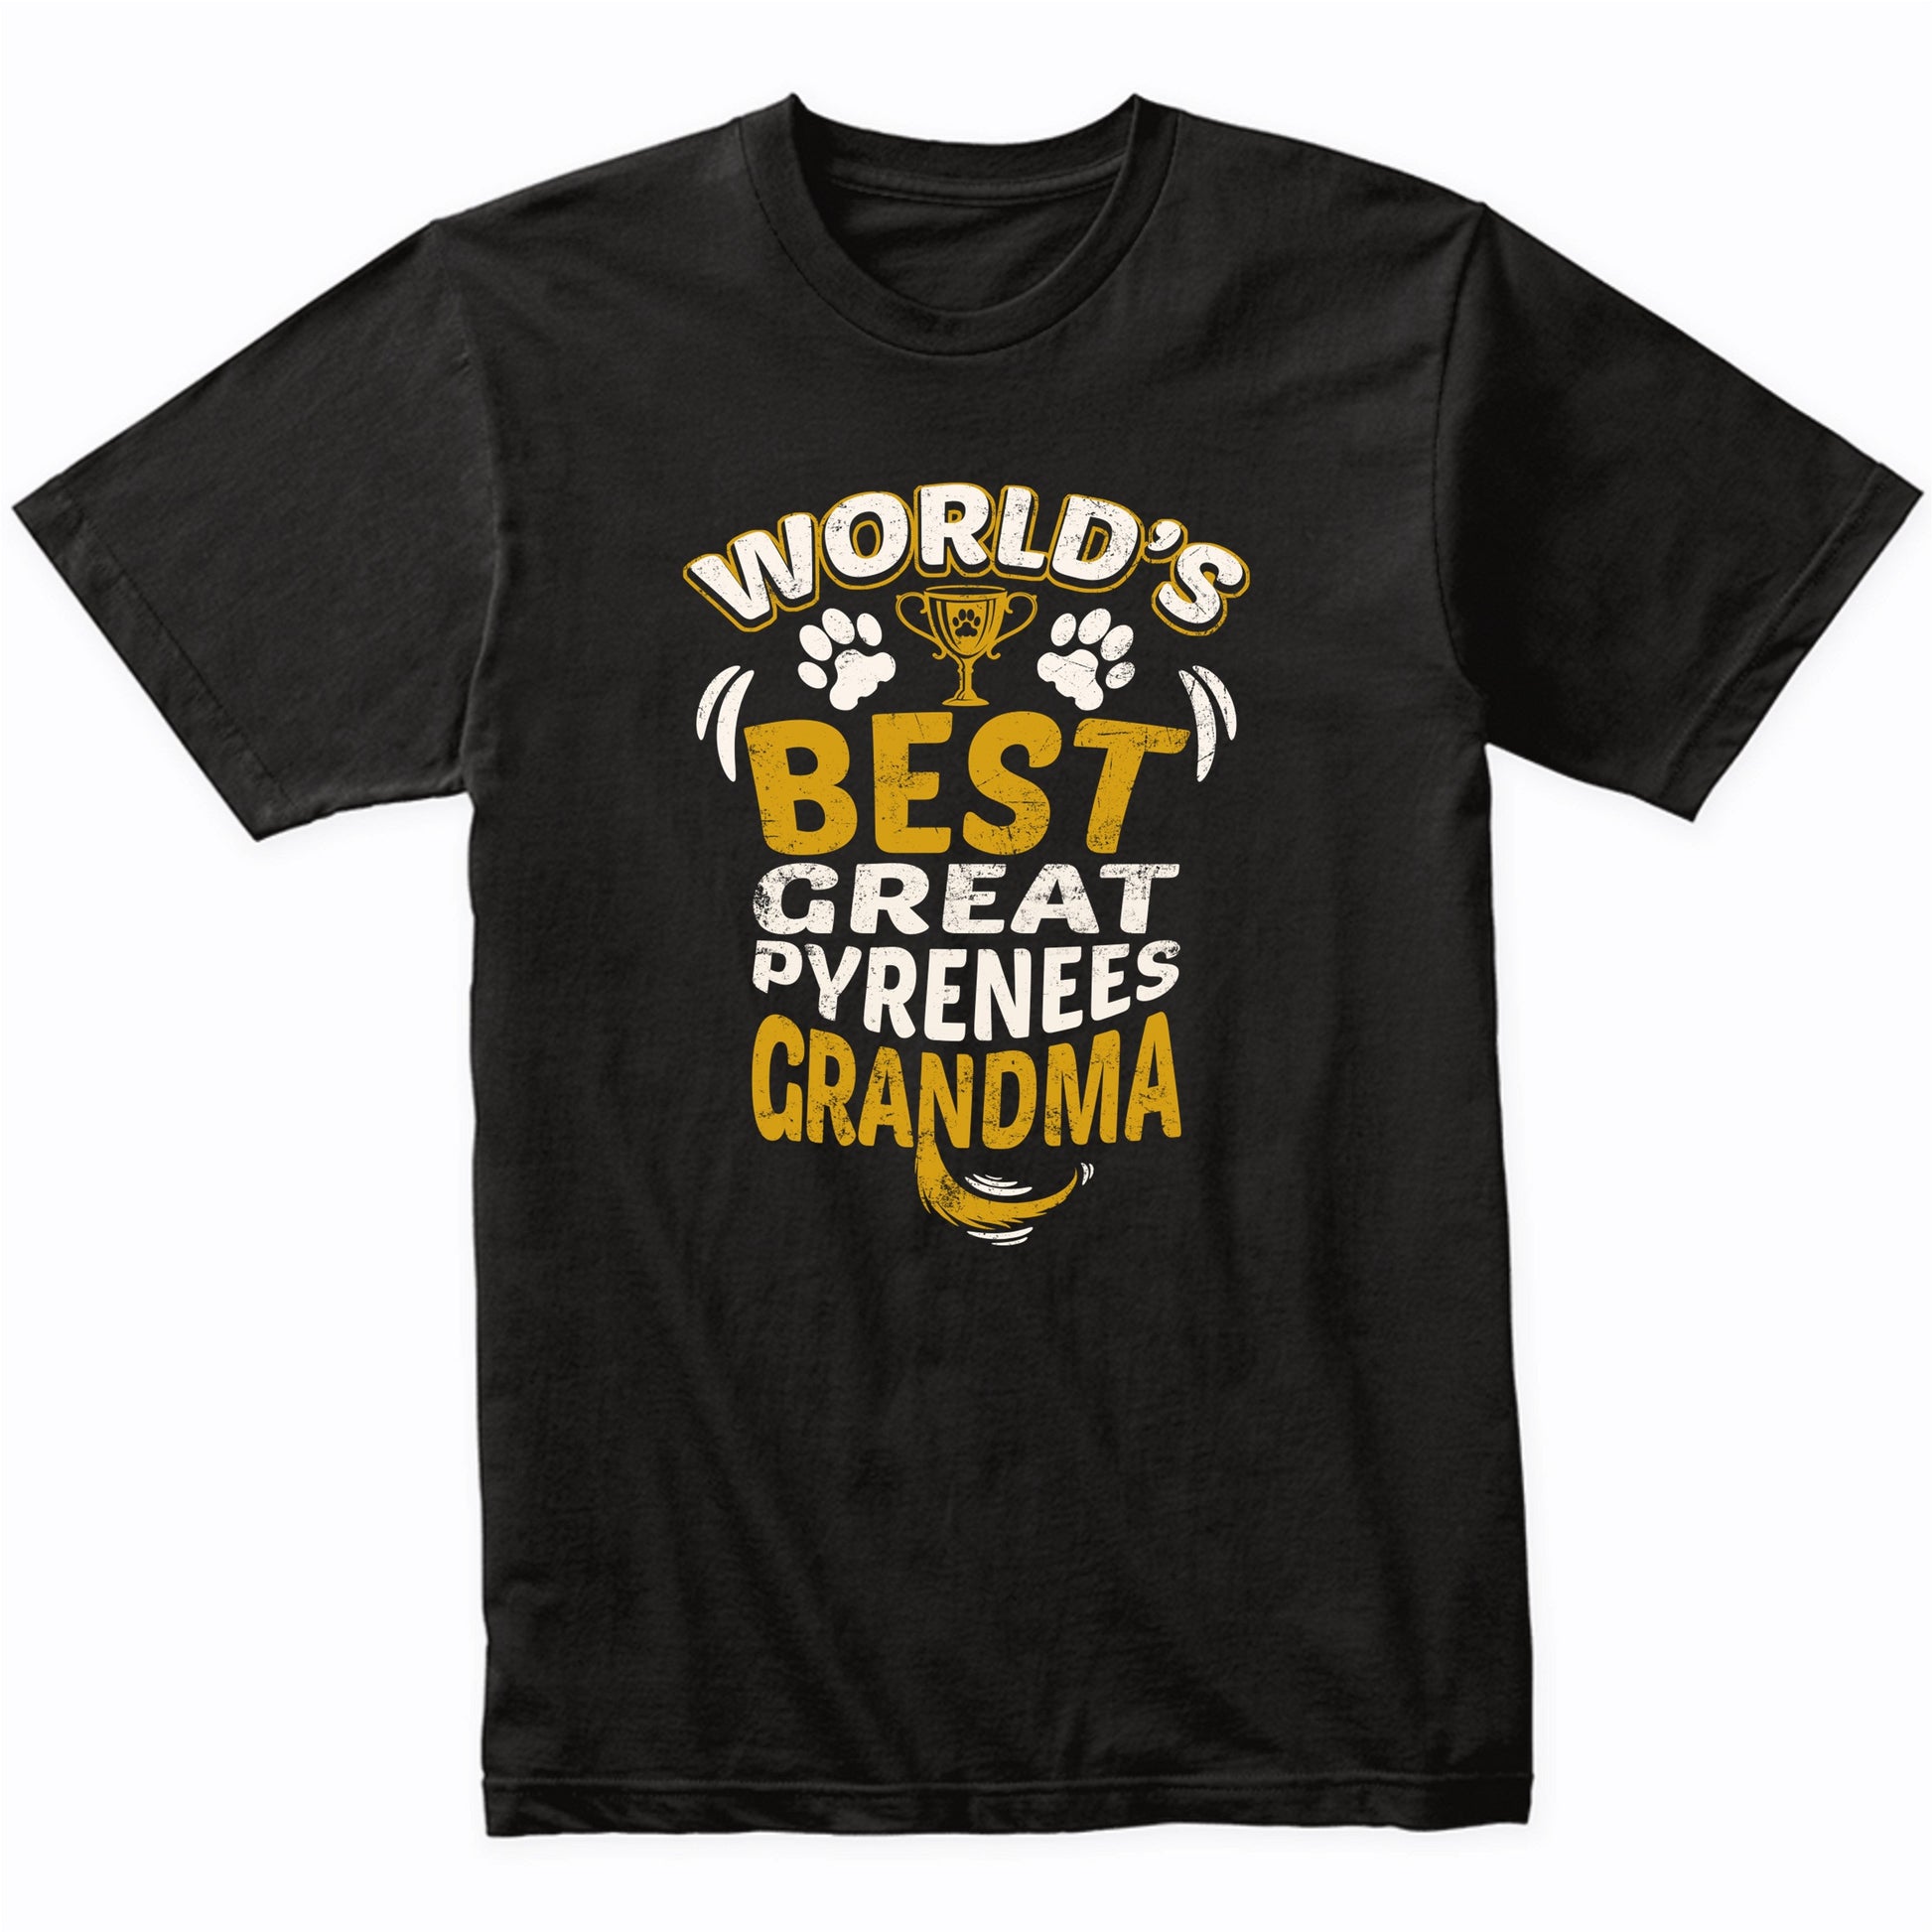 World's Best Great Pyrenees Grandma Graphic T-Shirt